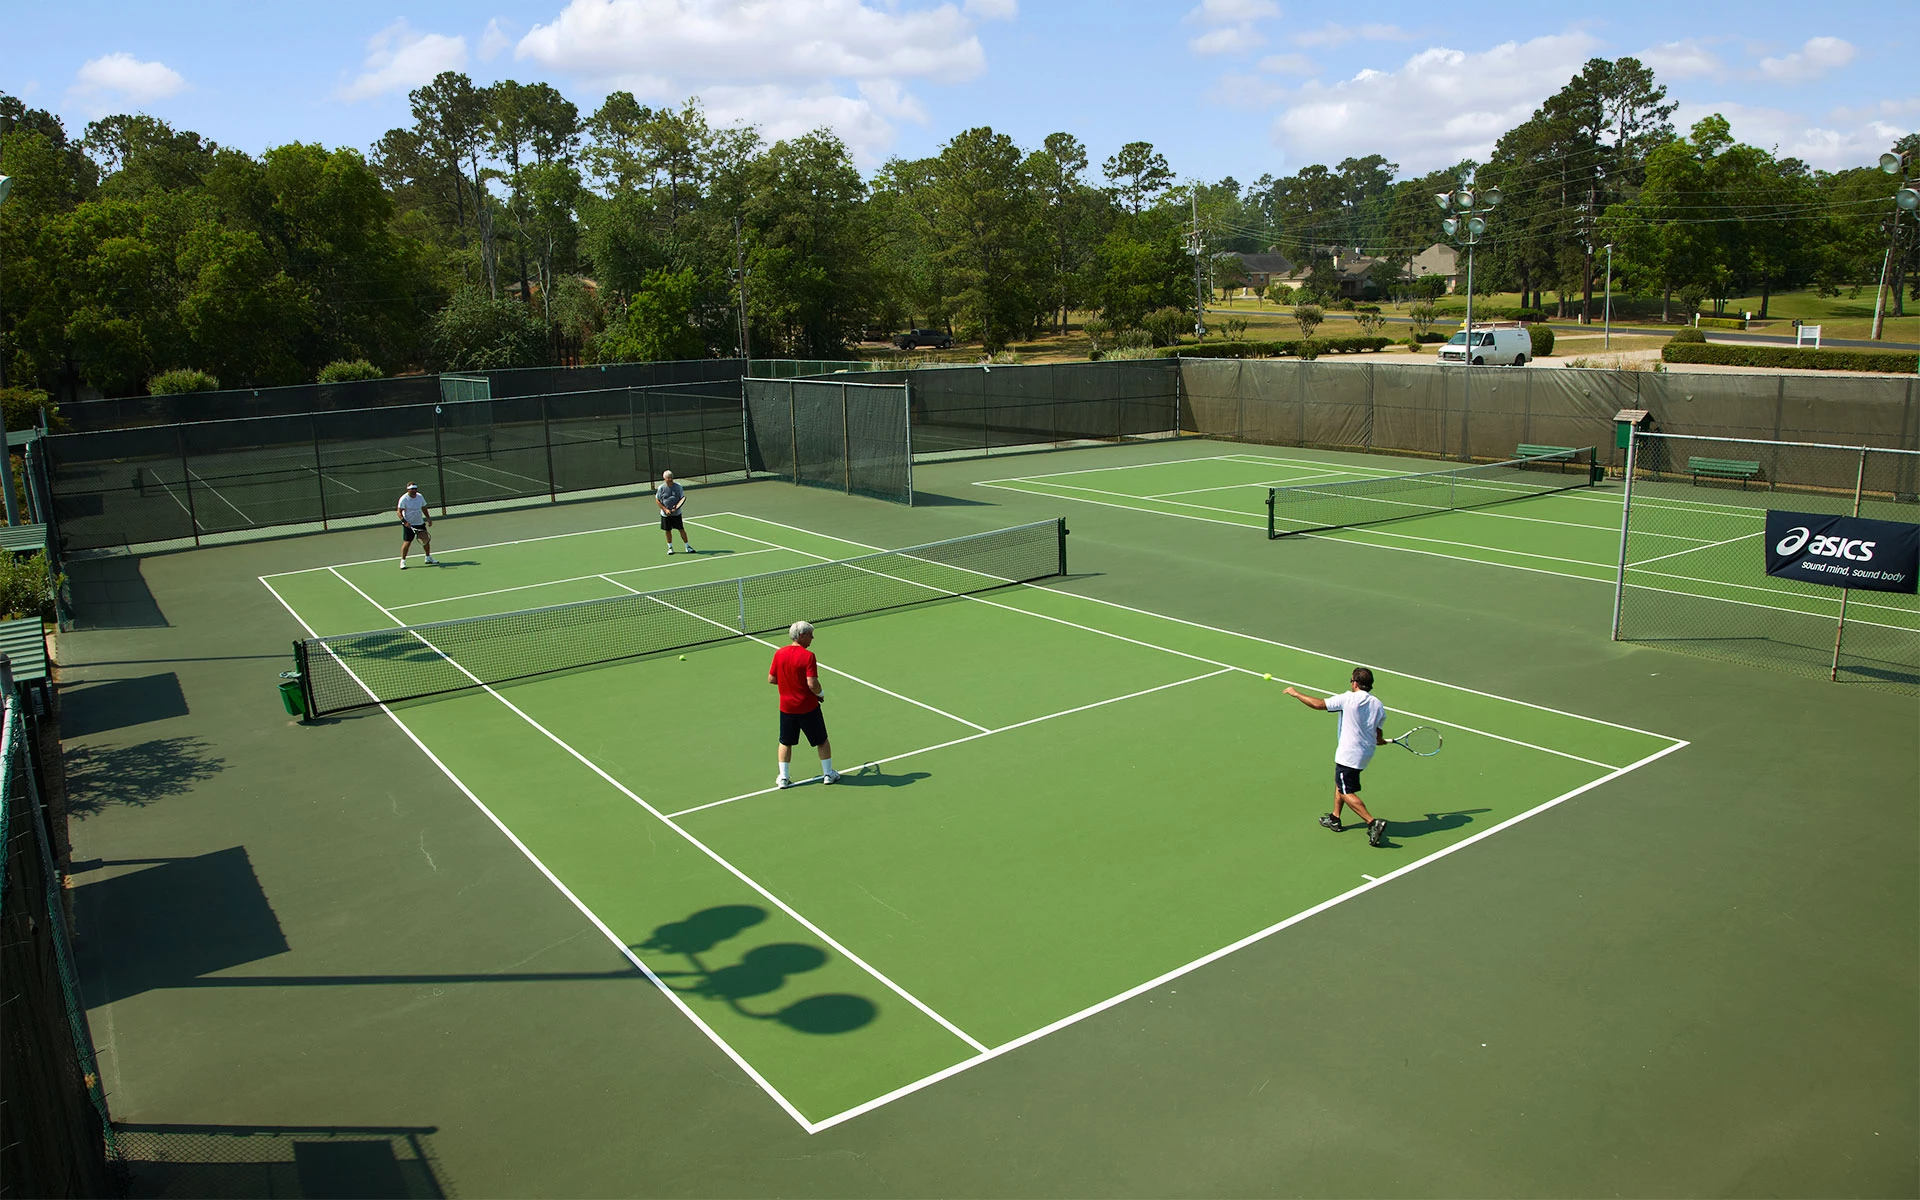 April Sound Country Club - Tennis